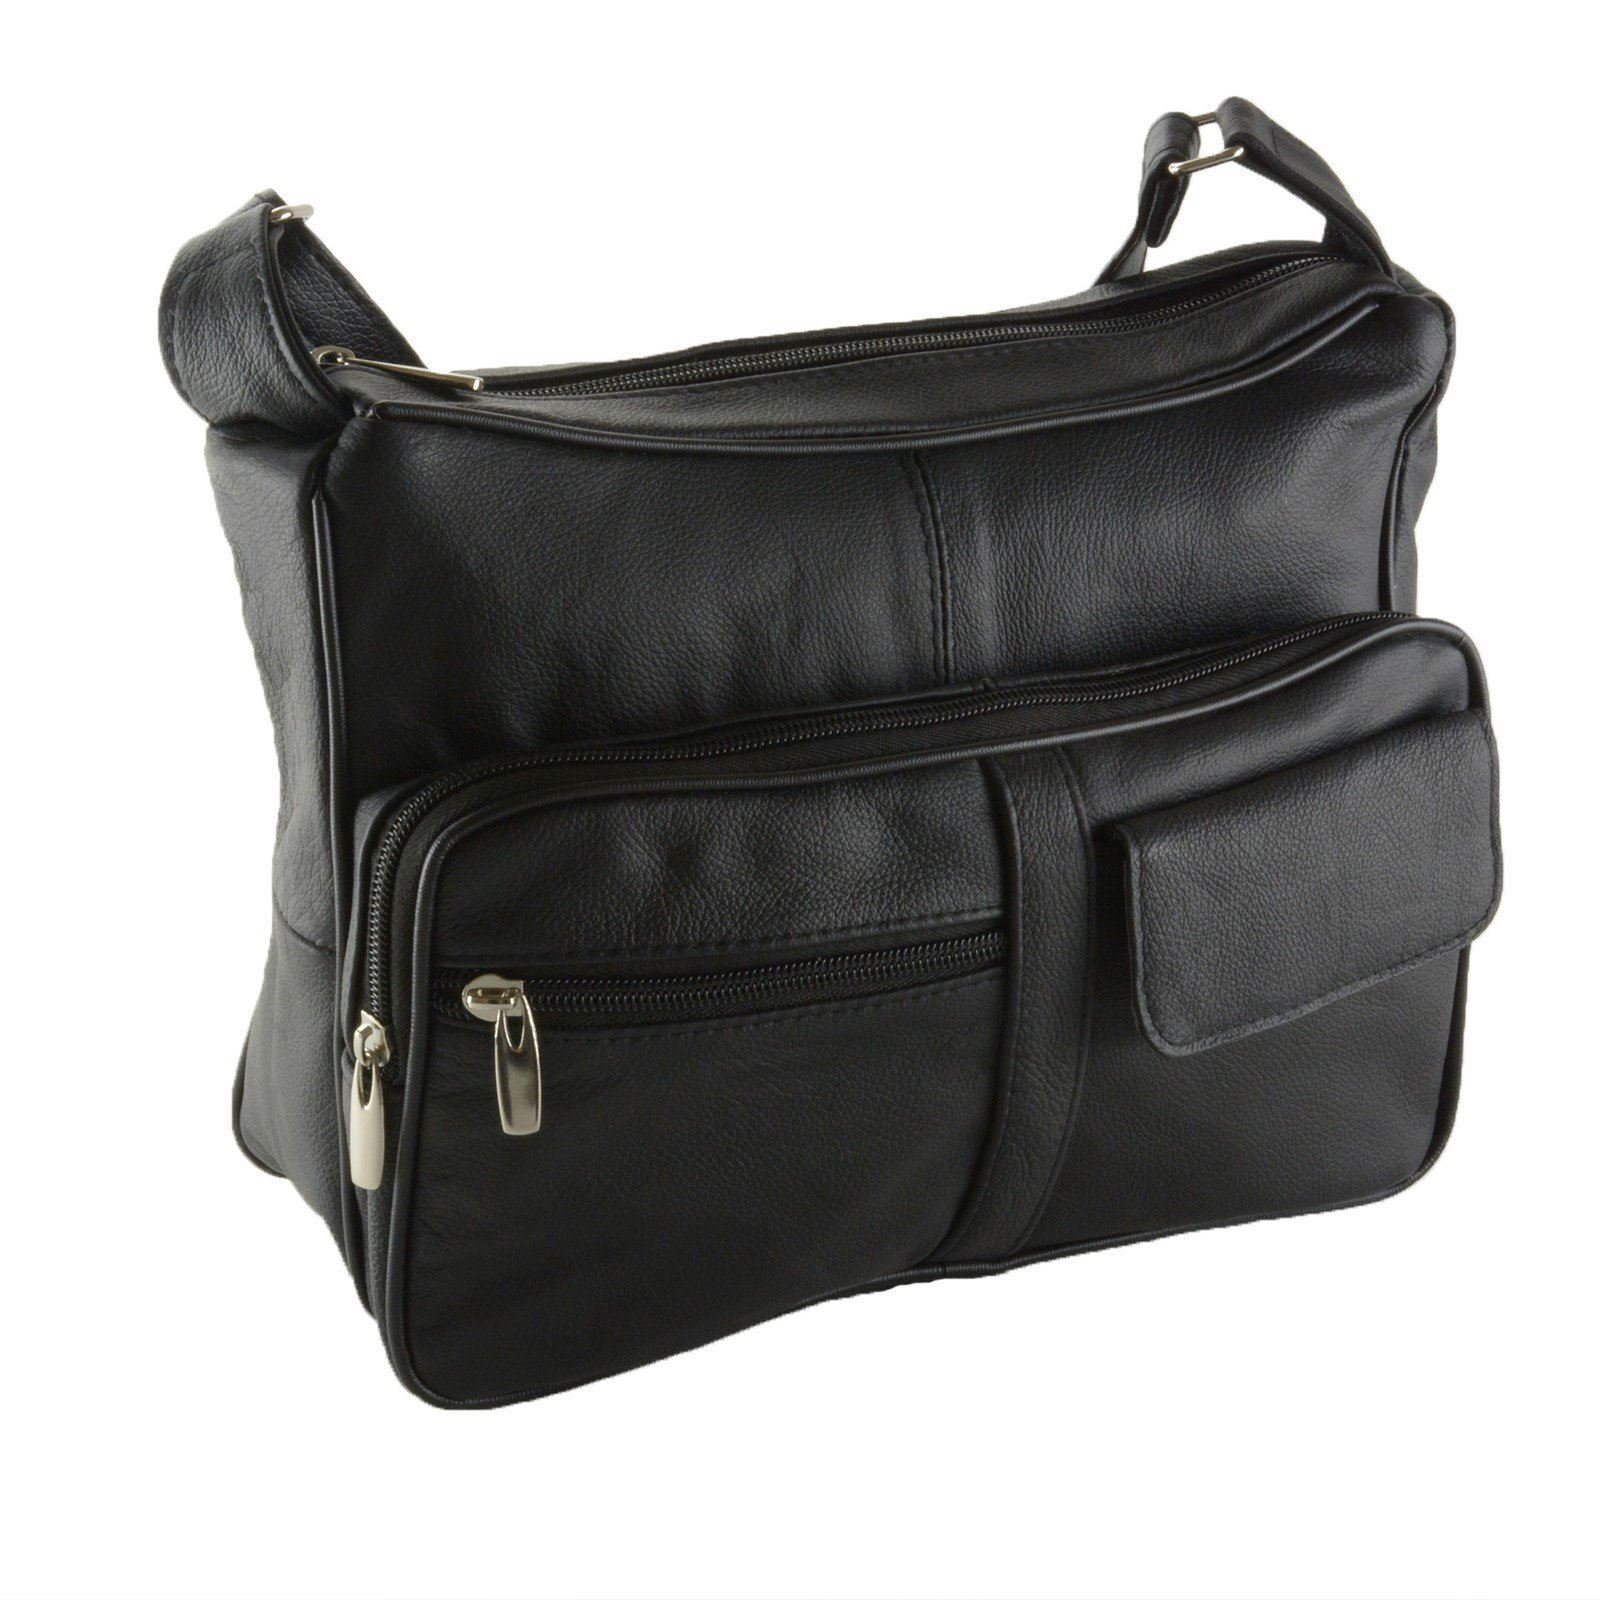 MARSHAL Medium Leather Handbag | Ladies Shoulder Bag | Organizer w Built in Wall